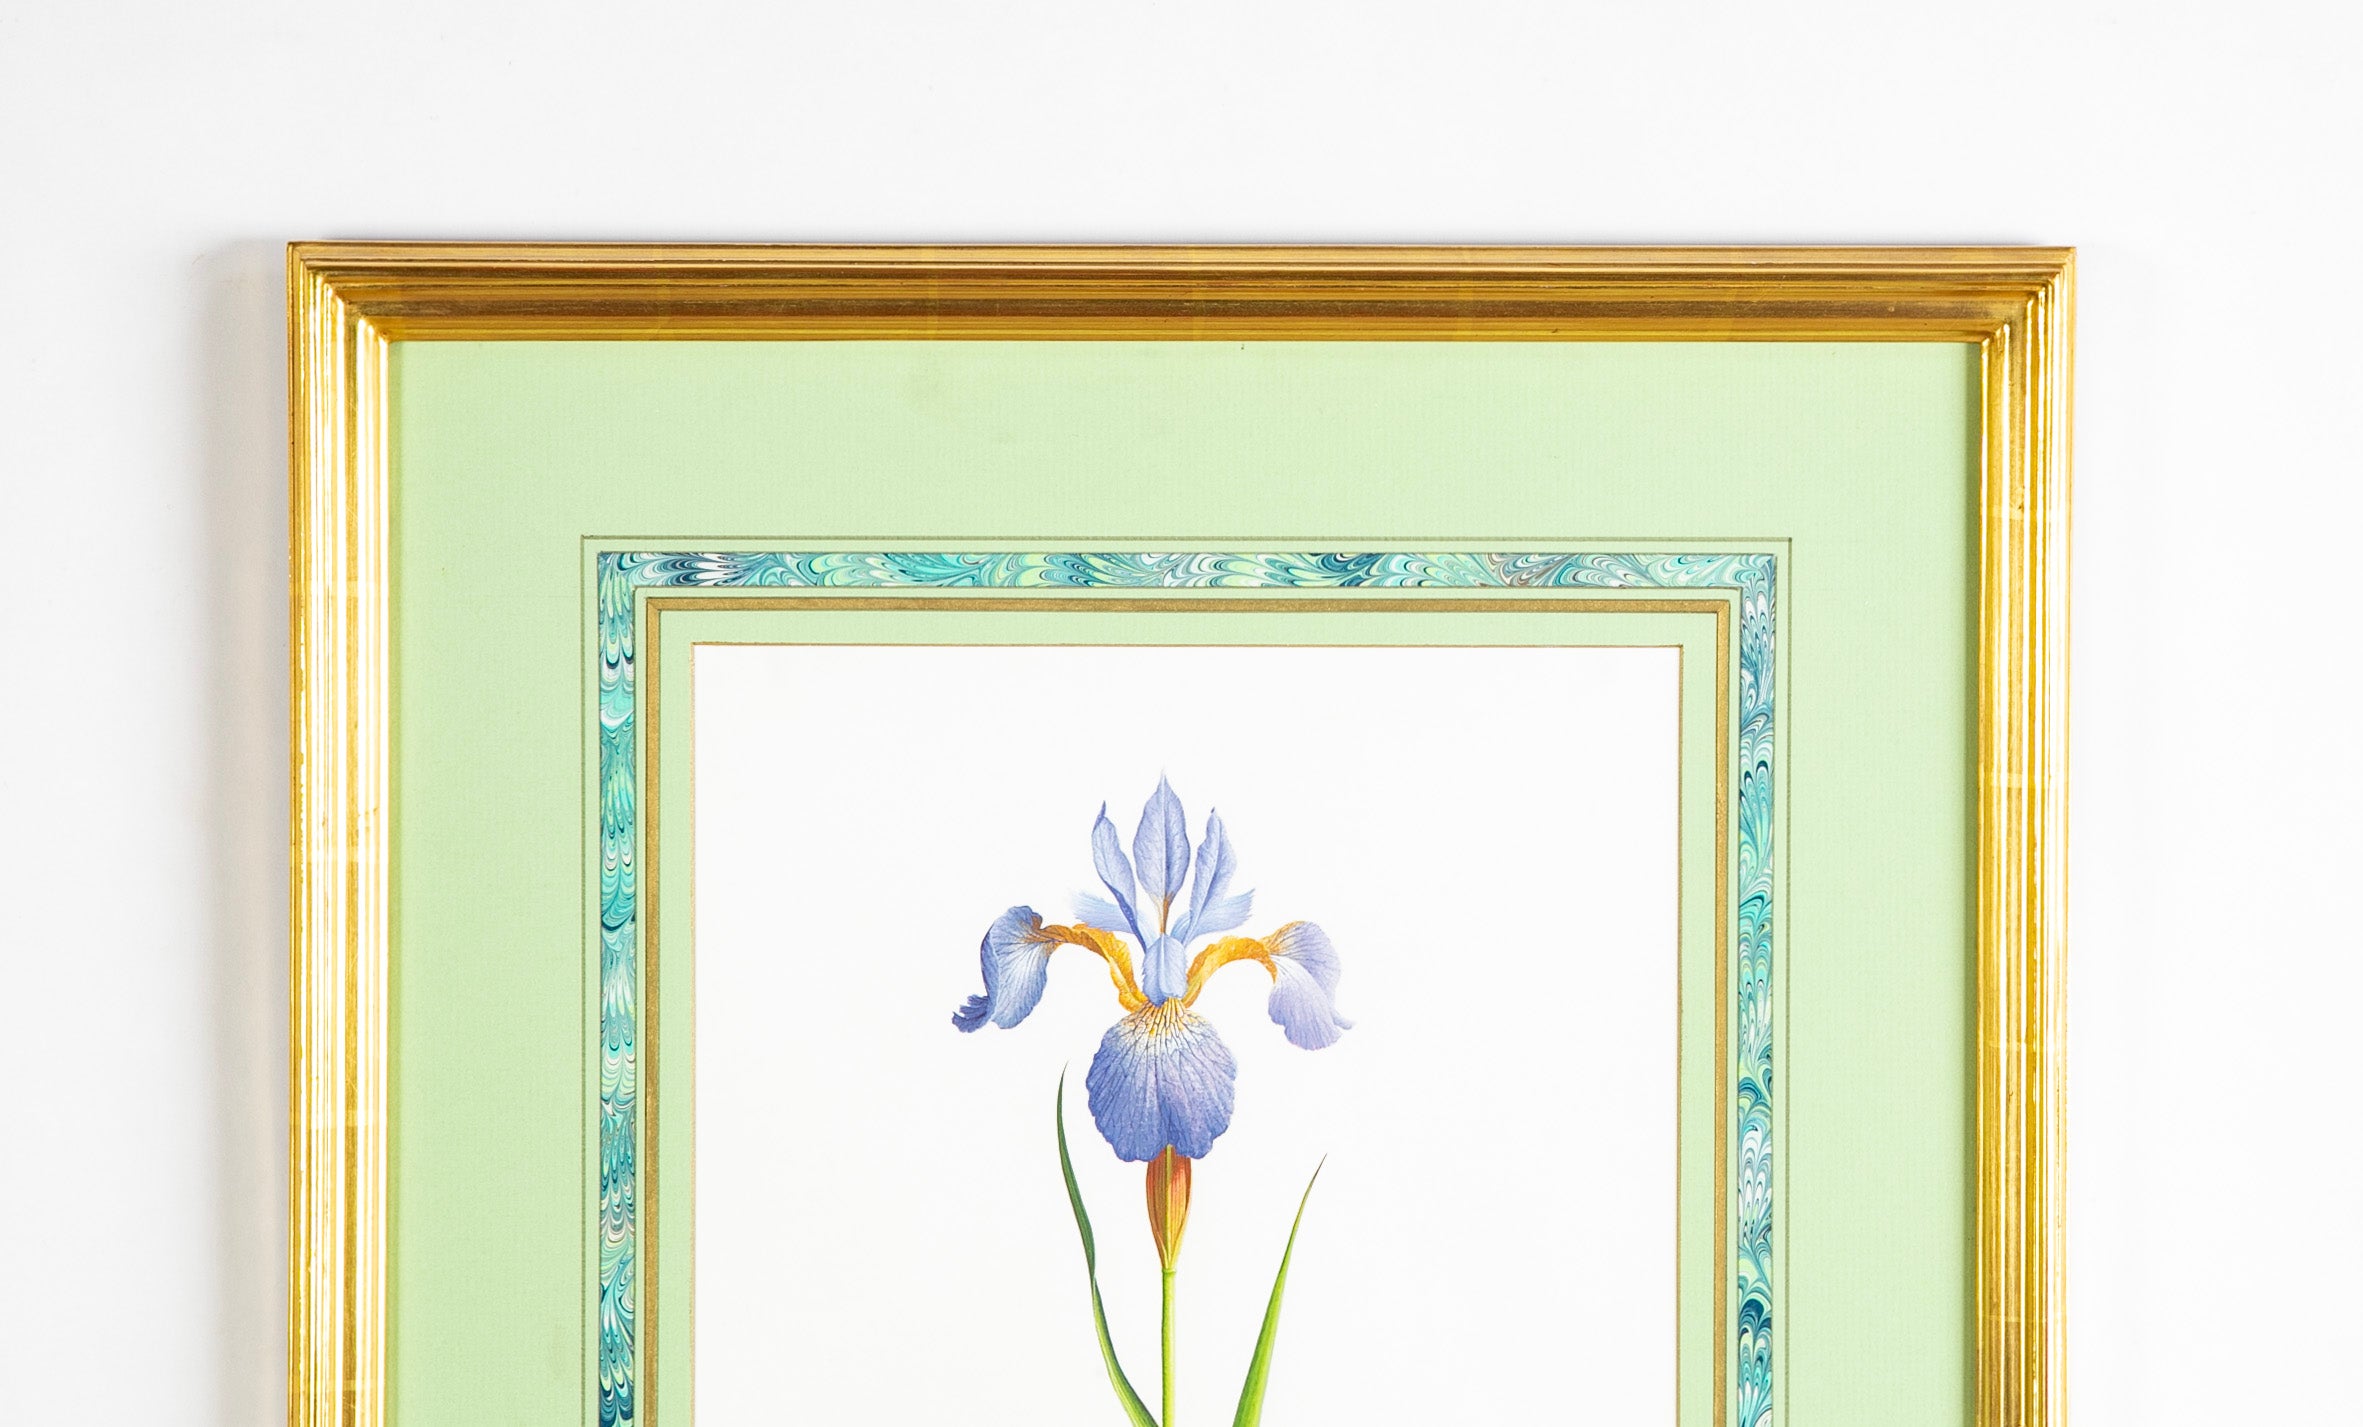 James L. Sain Original Watercolor of an Iris